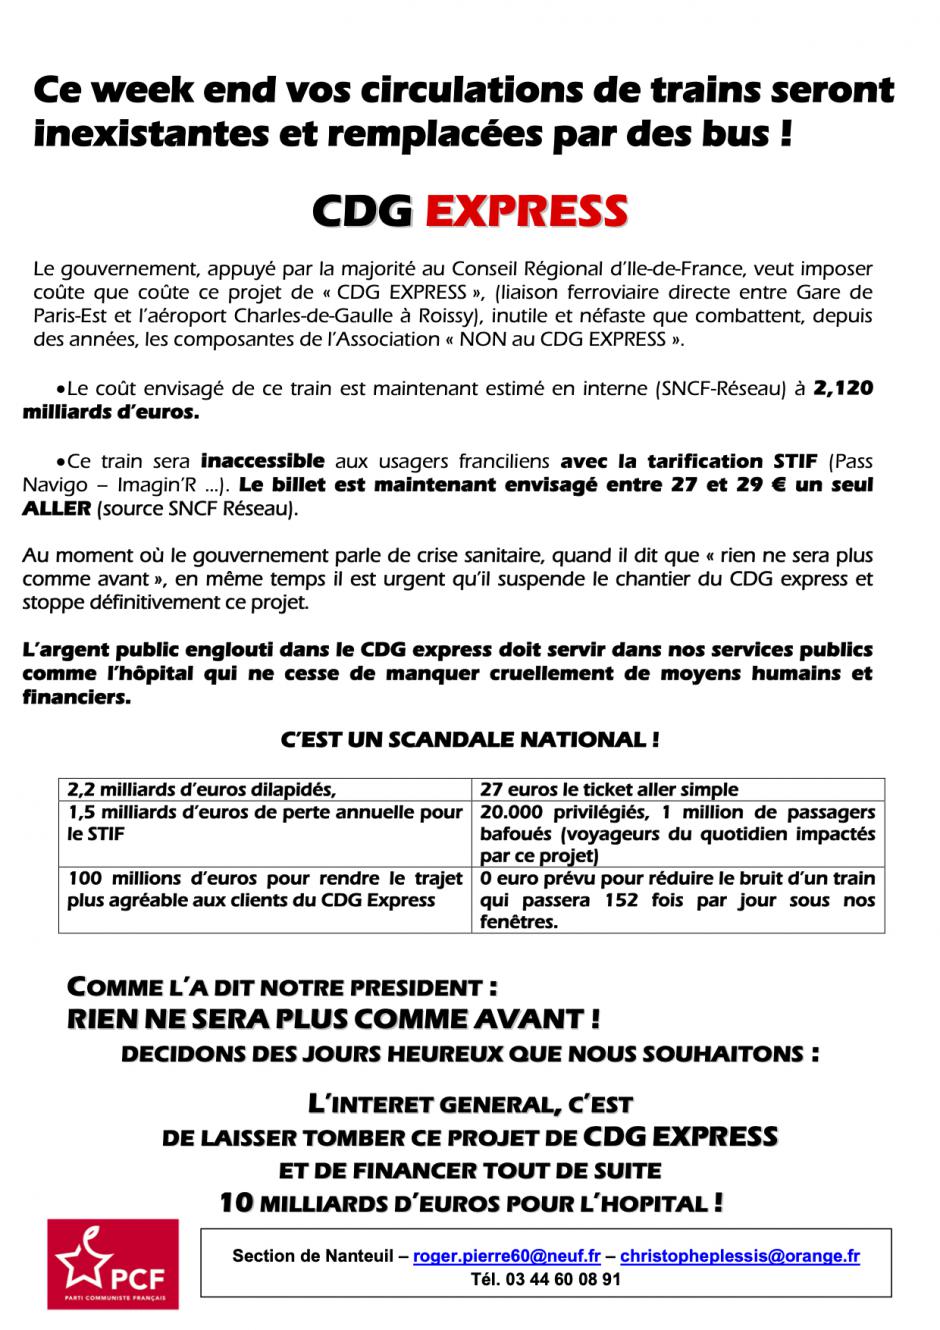 Tract « CDG Express, un scandale national » - PCF Nanteuil-Betz, 8 juin 2020